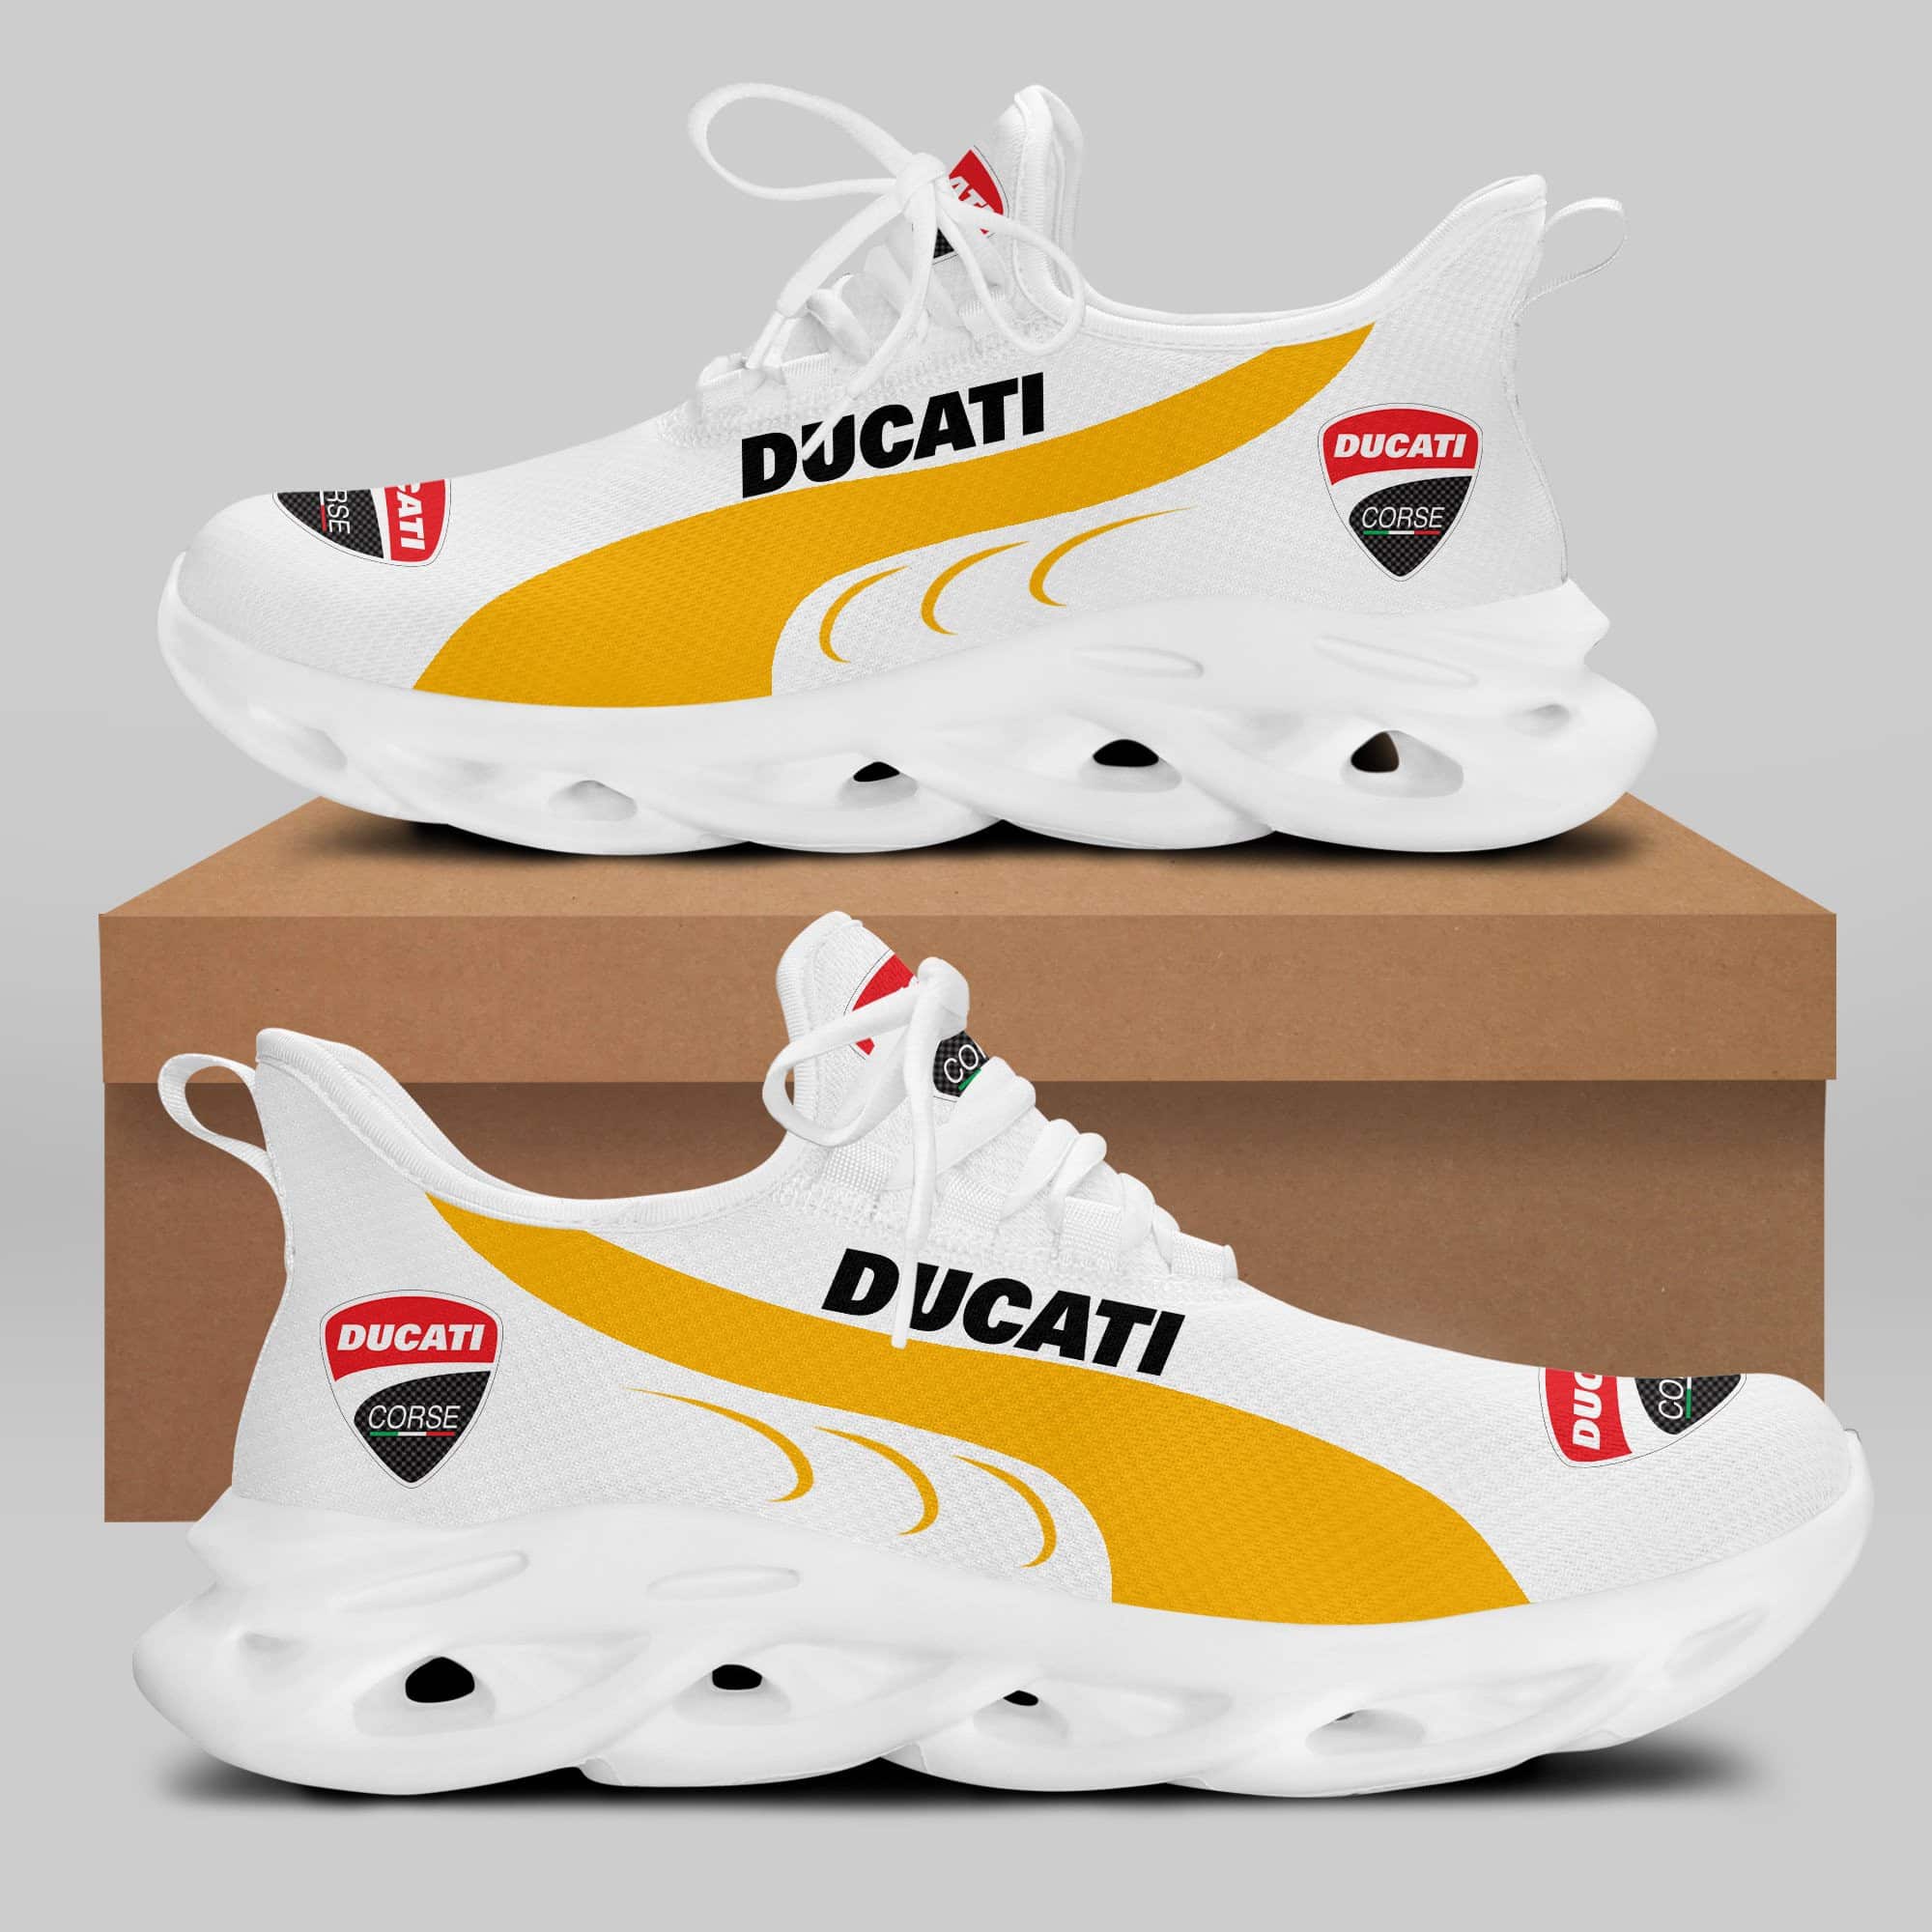 Ducati Racing Running Shoes Max Soul Shoes Sneakers Ver 64 1